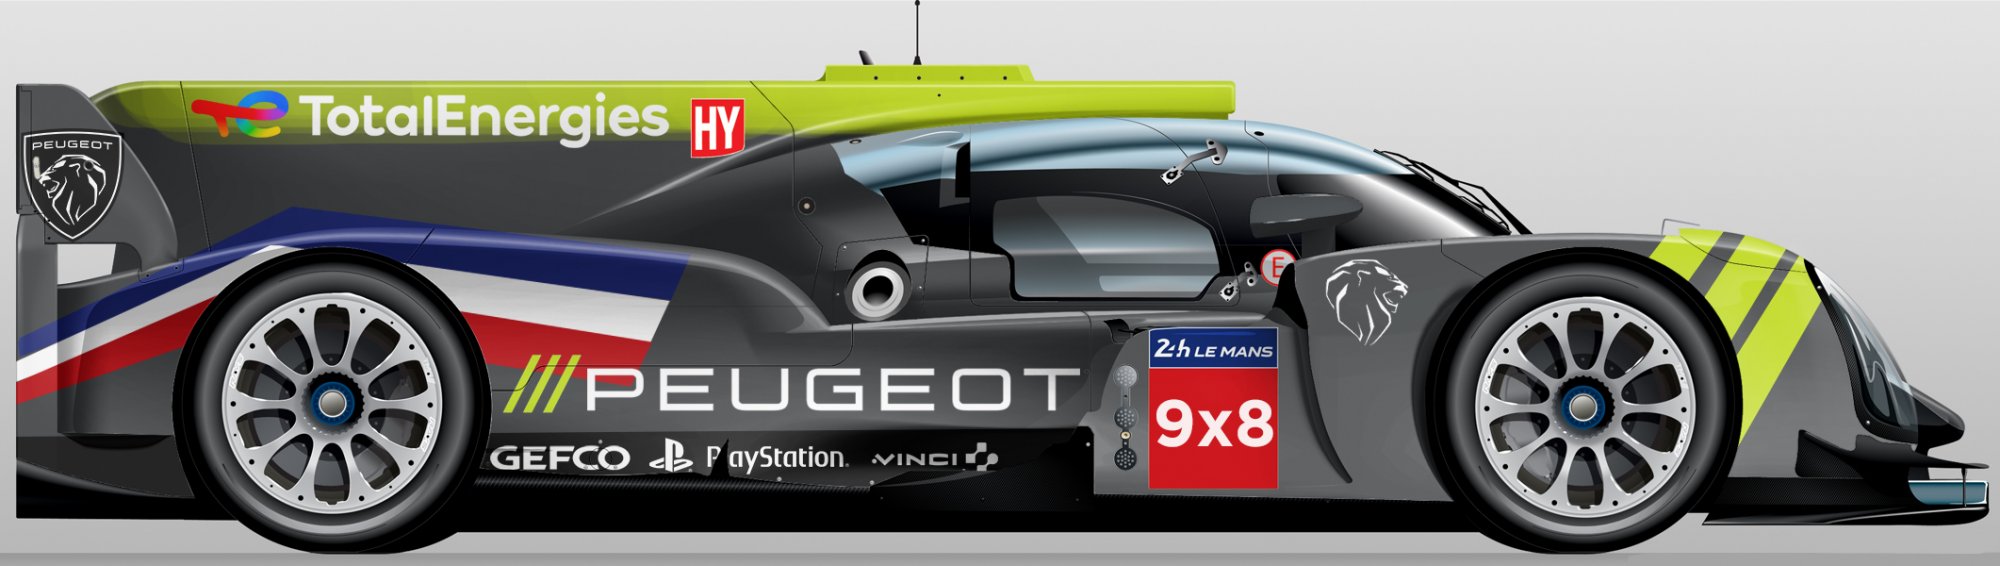 Peugeot LMP.jpg